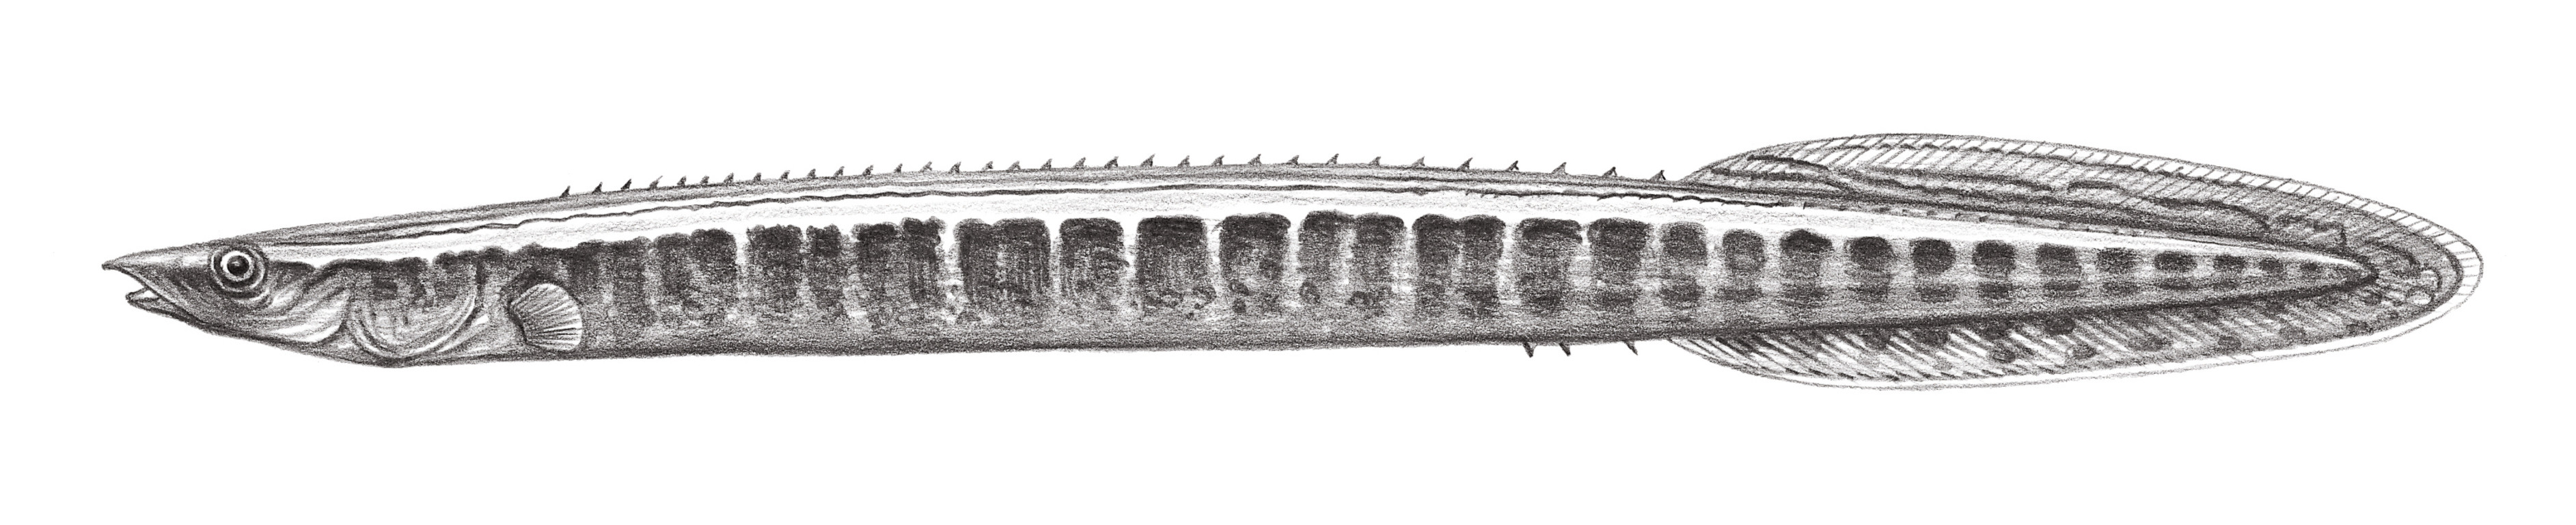 852.	長頜棘鰍 Macrognathus aculeatus (Bloch, 1786)